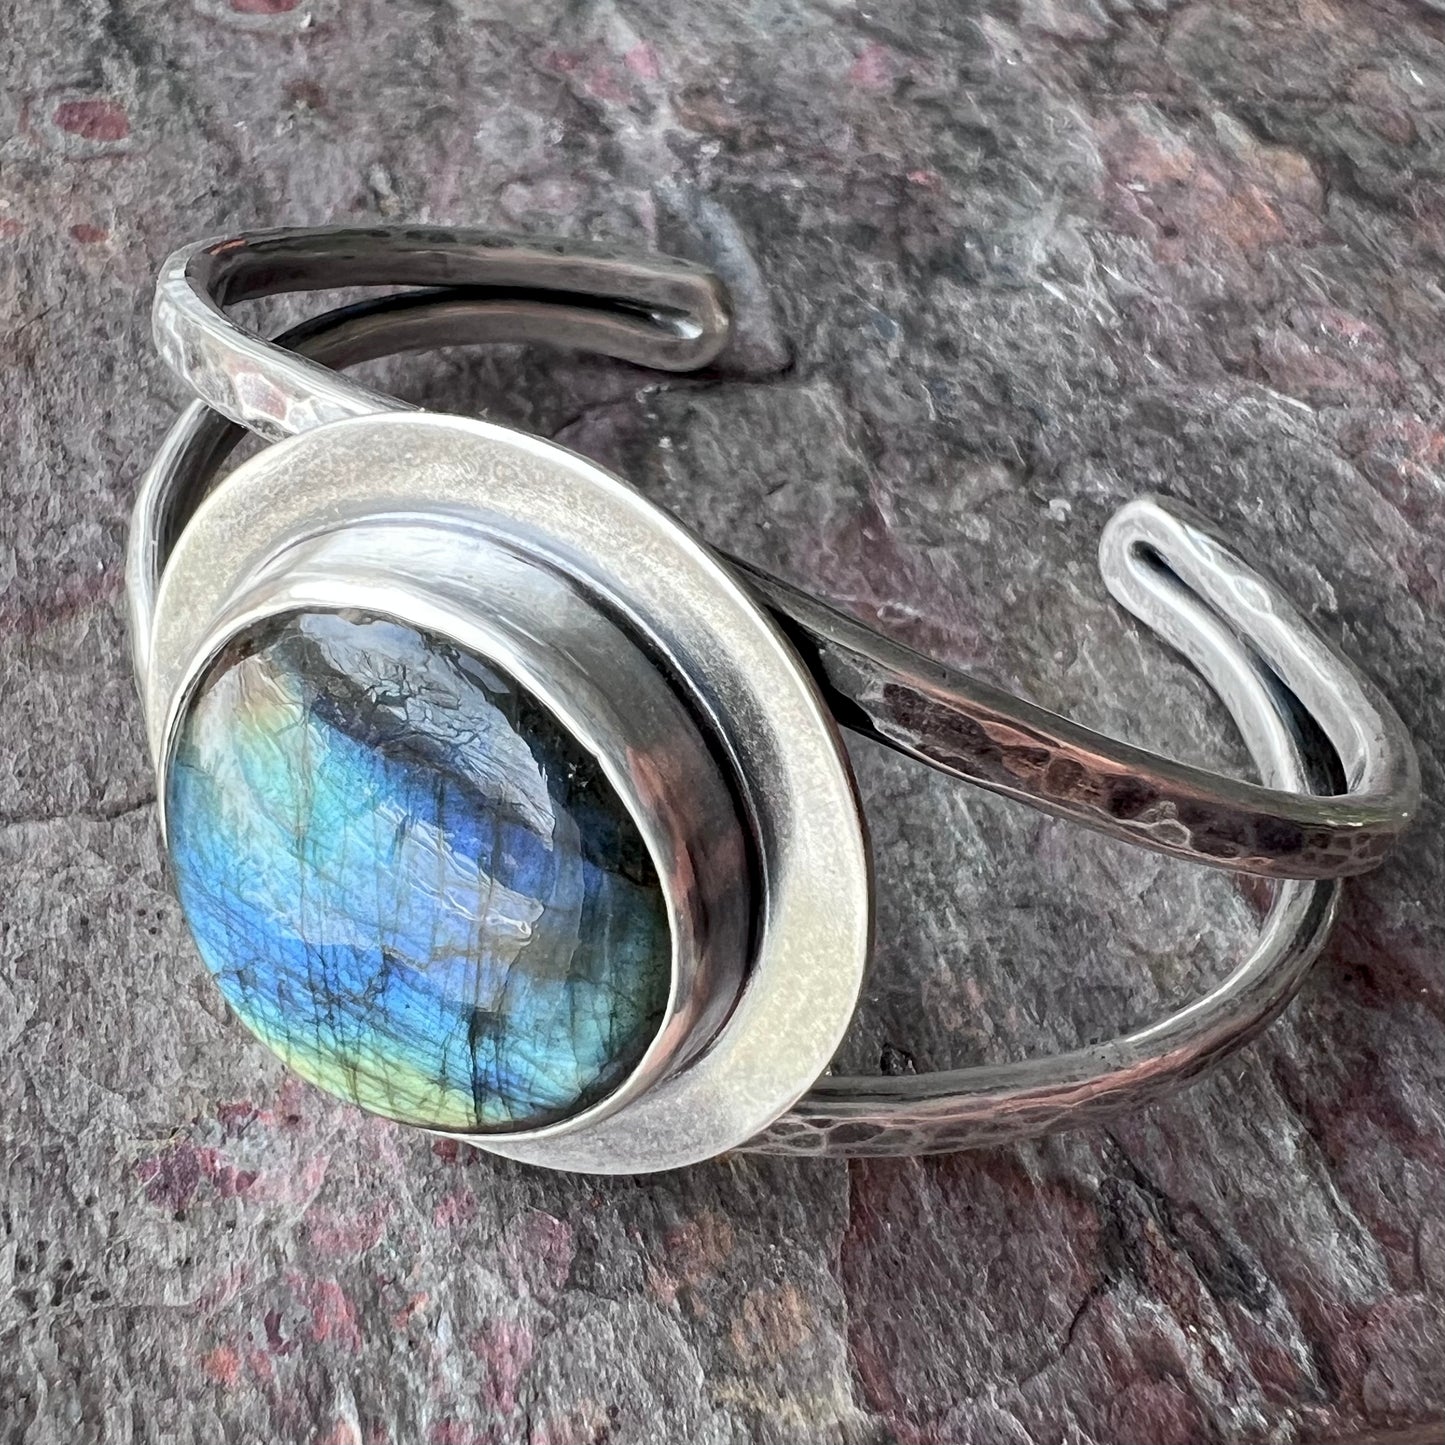 Labradorite Sterling Silver Bracelet - Handmade One-of-a-kind Bracelet